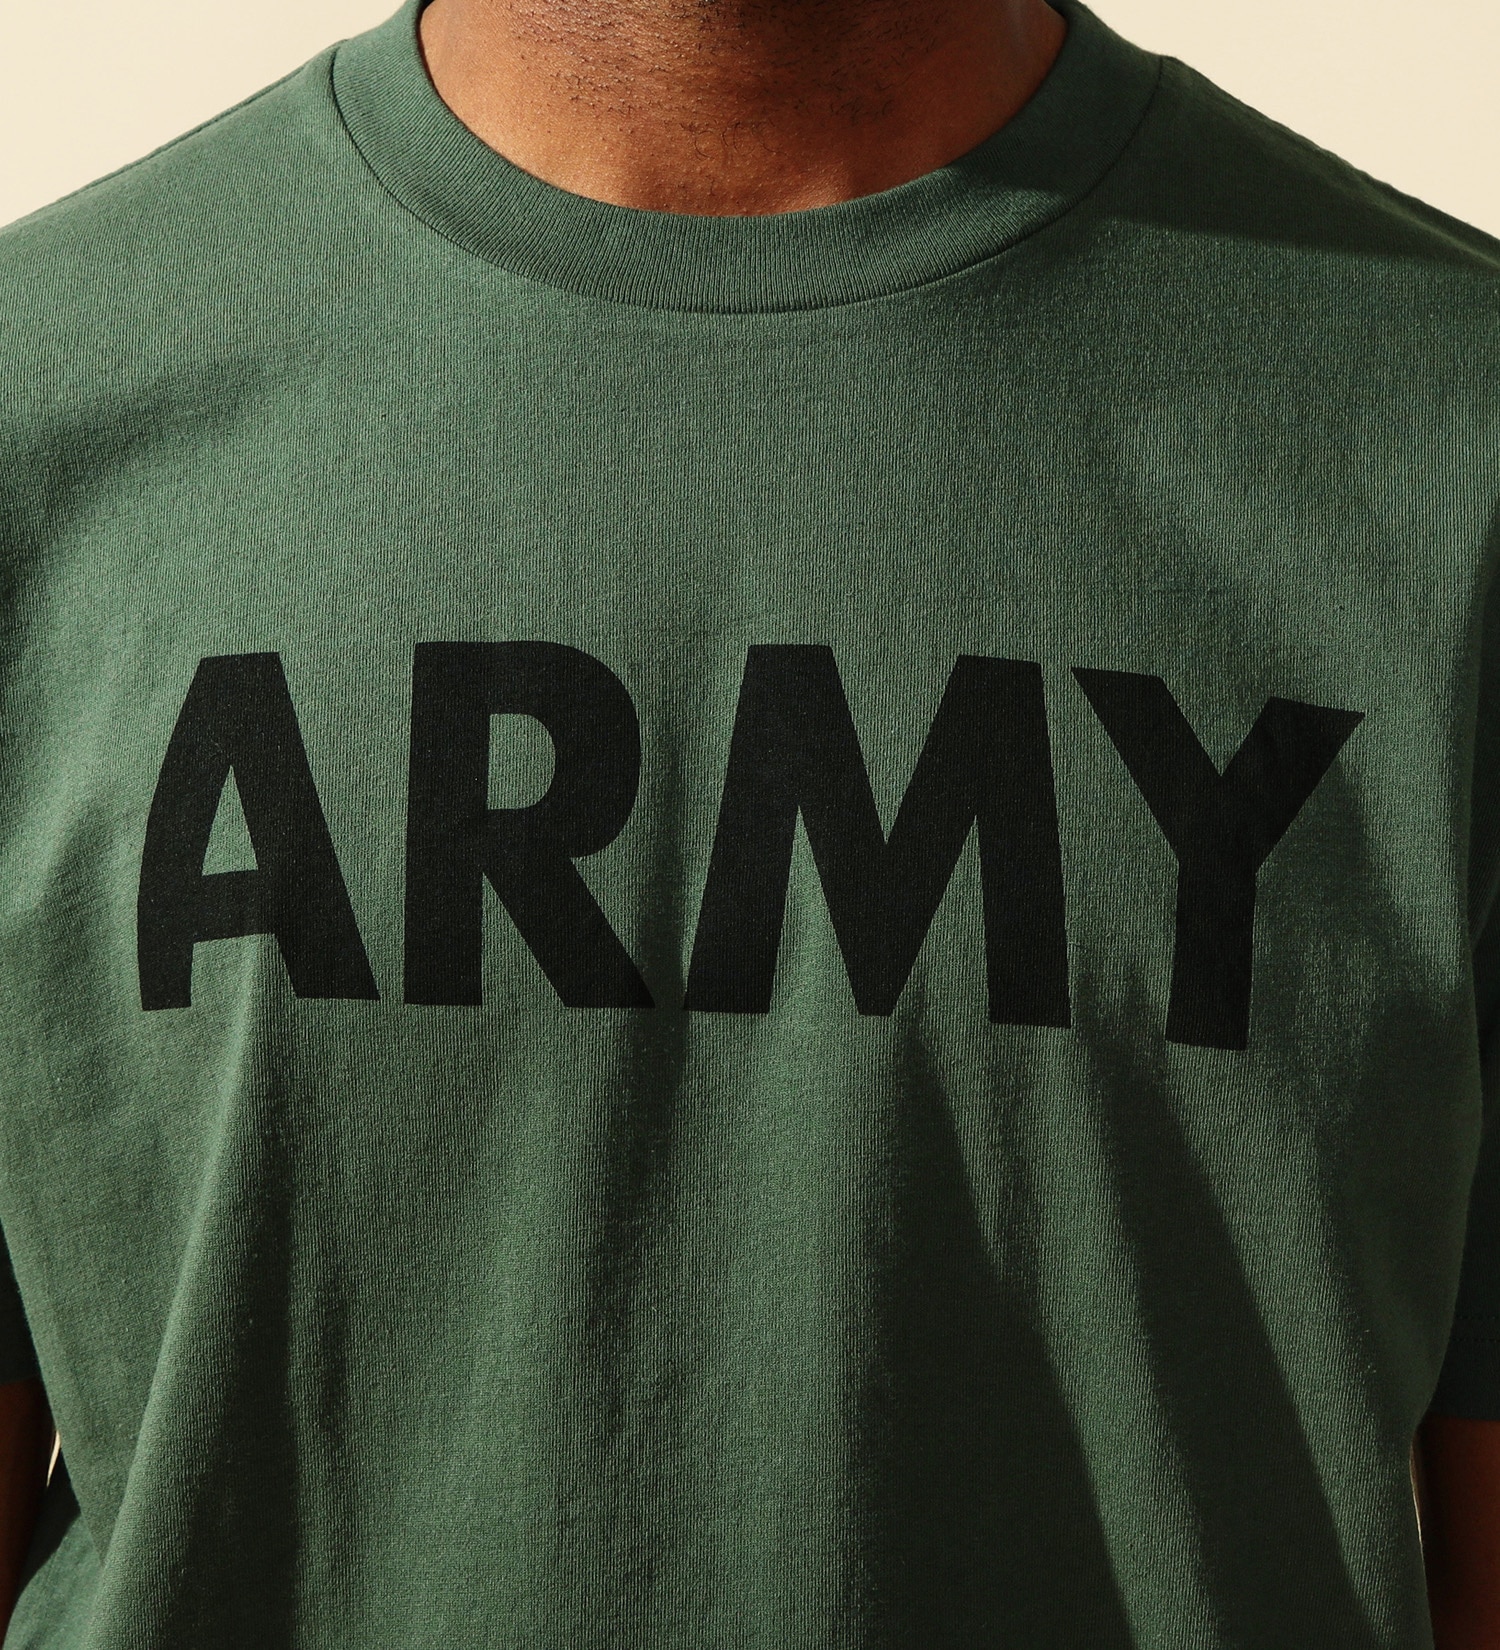 ALPHA(アルファ)のARMYプリントTシャツ 半袖|トップス/Tシャツ/カットソー/メンズ|ダークグリーン